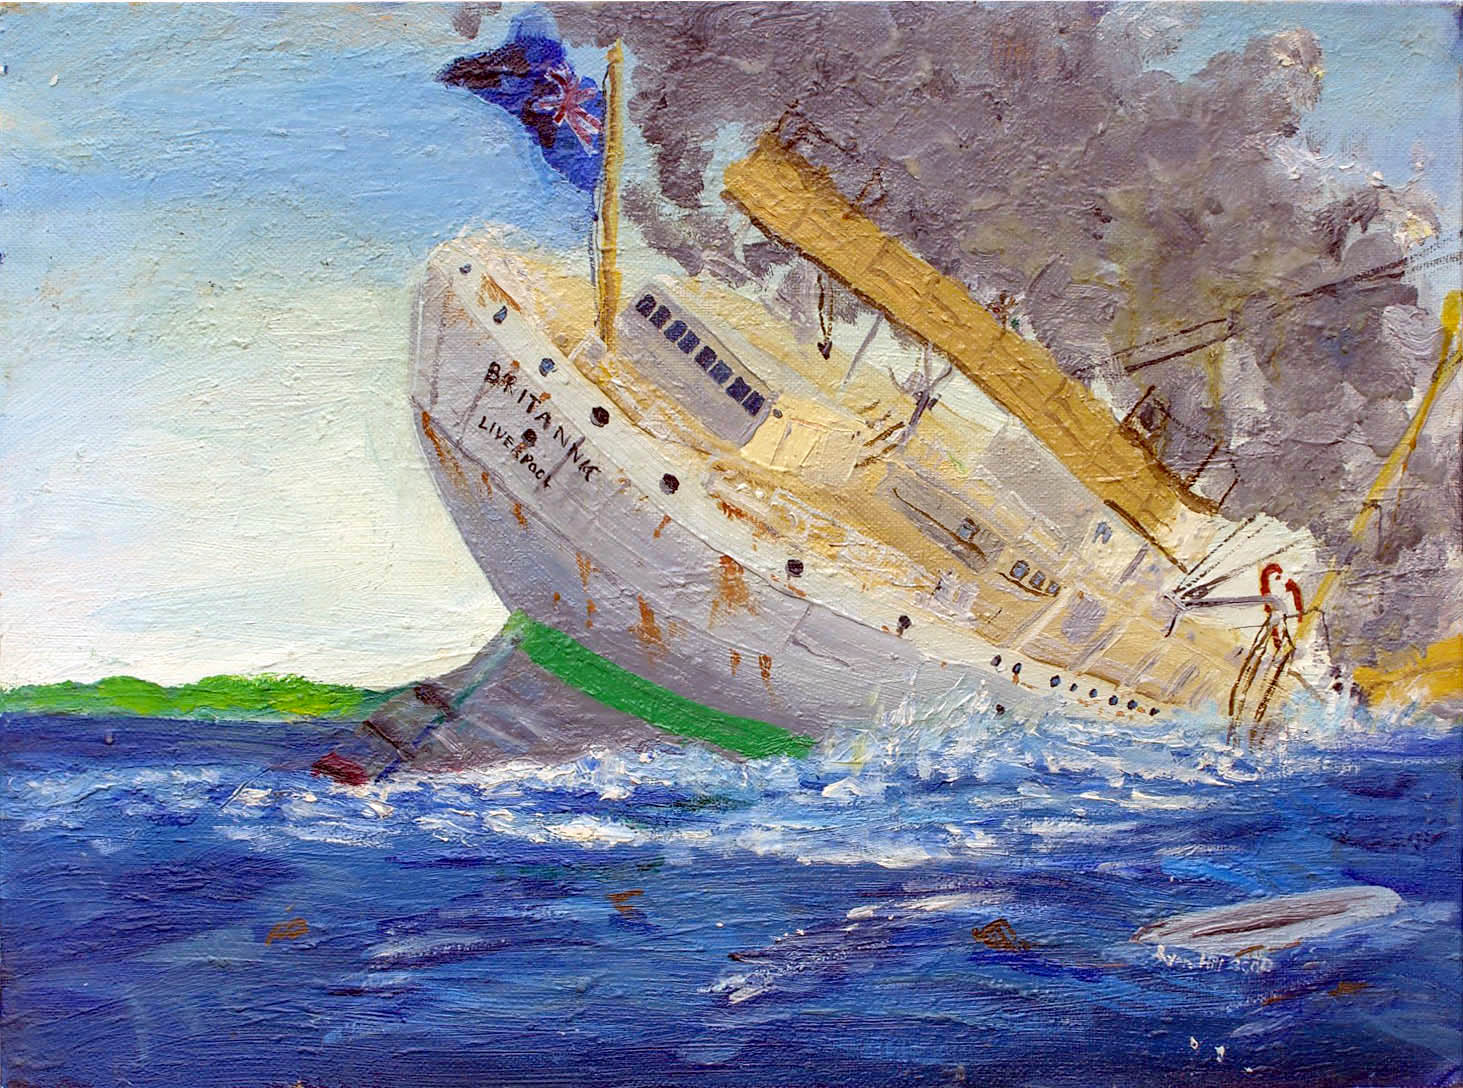 Sinking Of The Britannic 2 By Rhill555 On Deviantart